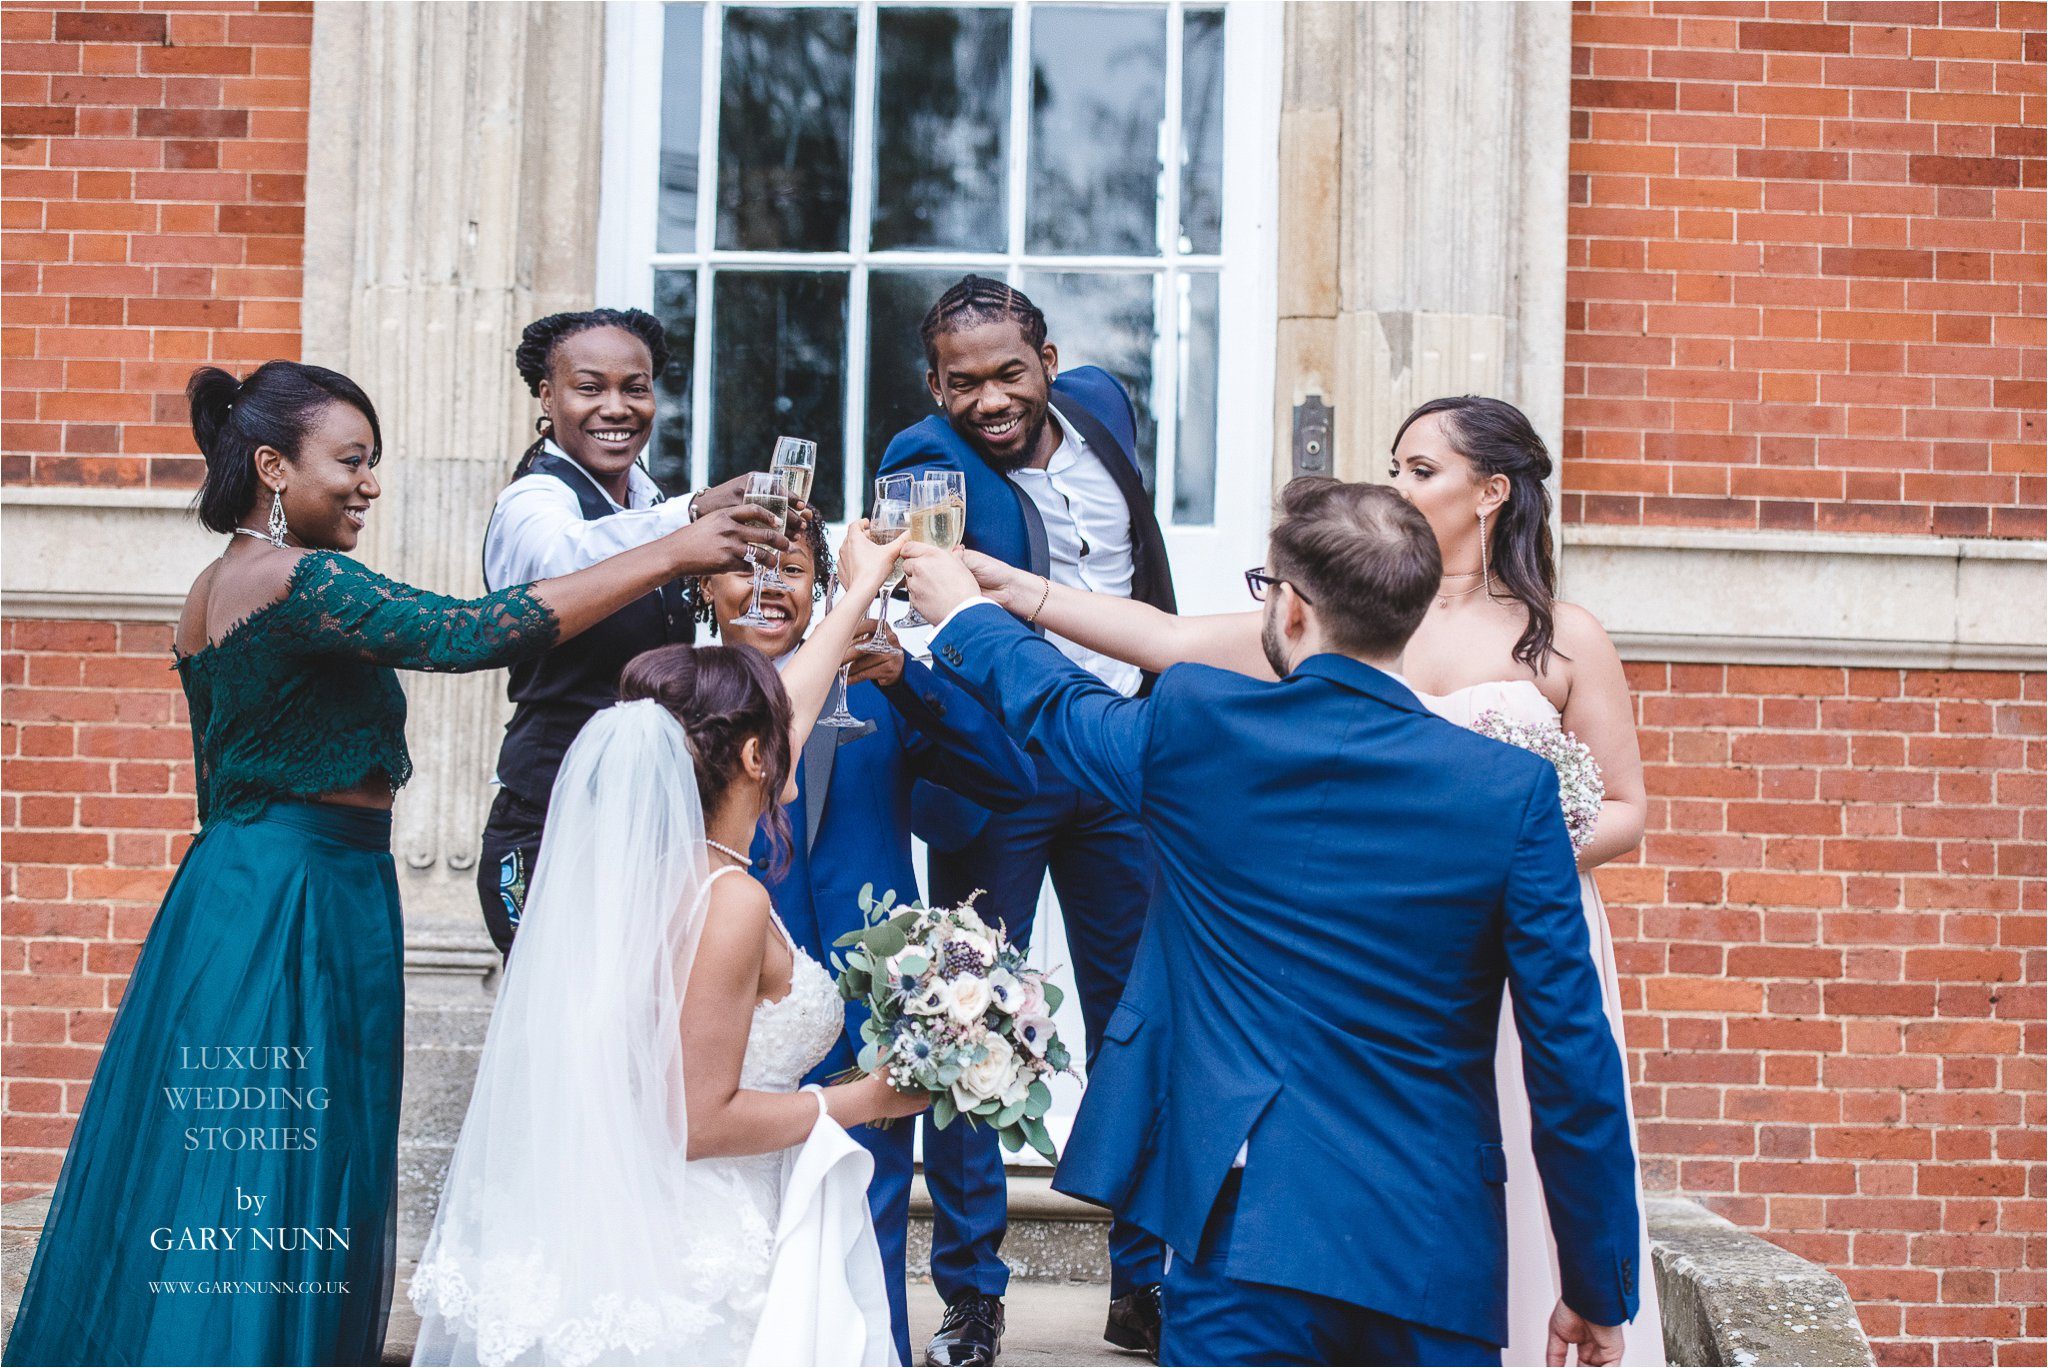 Chicheley Hall Weddings, wedding photographer Milton Keynes, Wedding Photographer Leighton Buzzard, wedding photographer Bedfordshire, destination wedding photographer